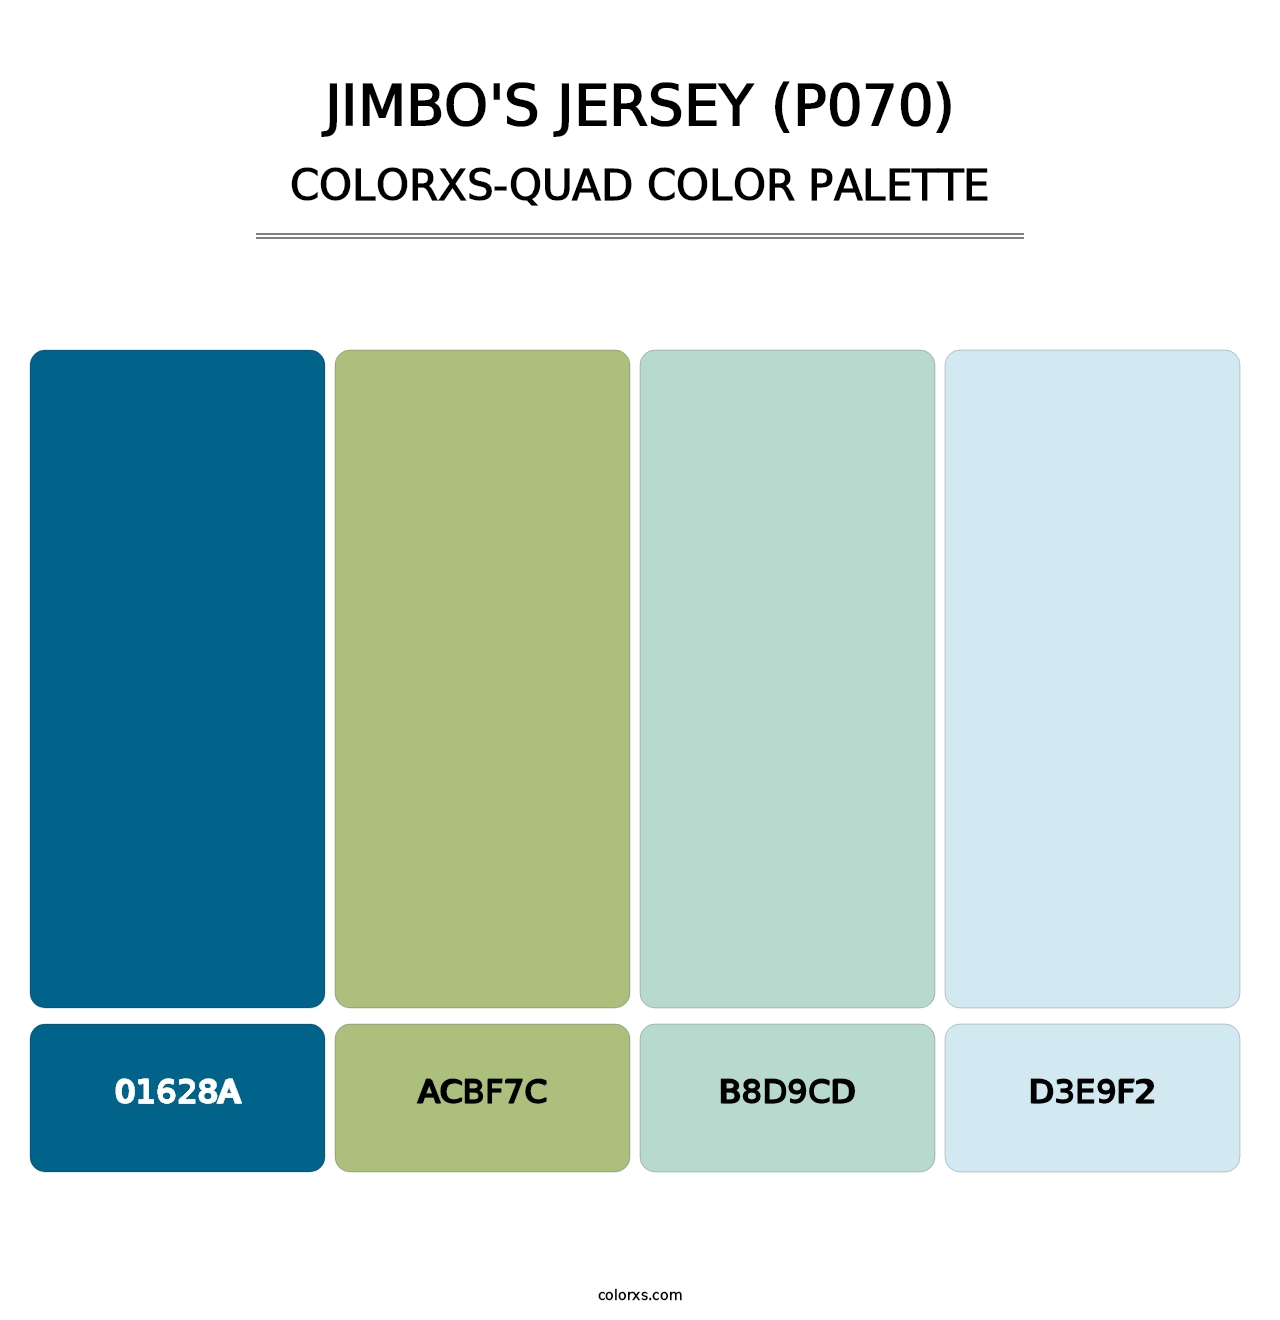 Jimbo's Jersey (P070) - Colorxs Quad Palette